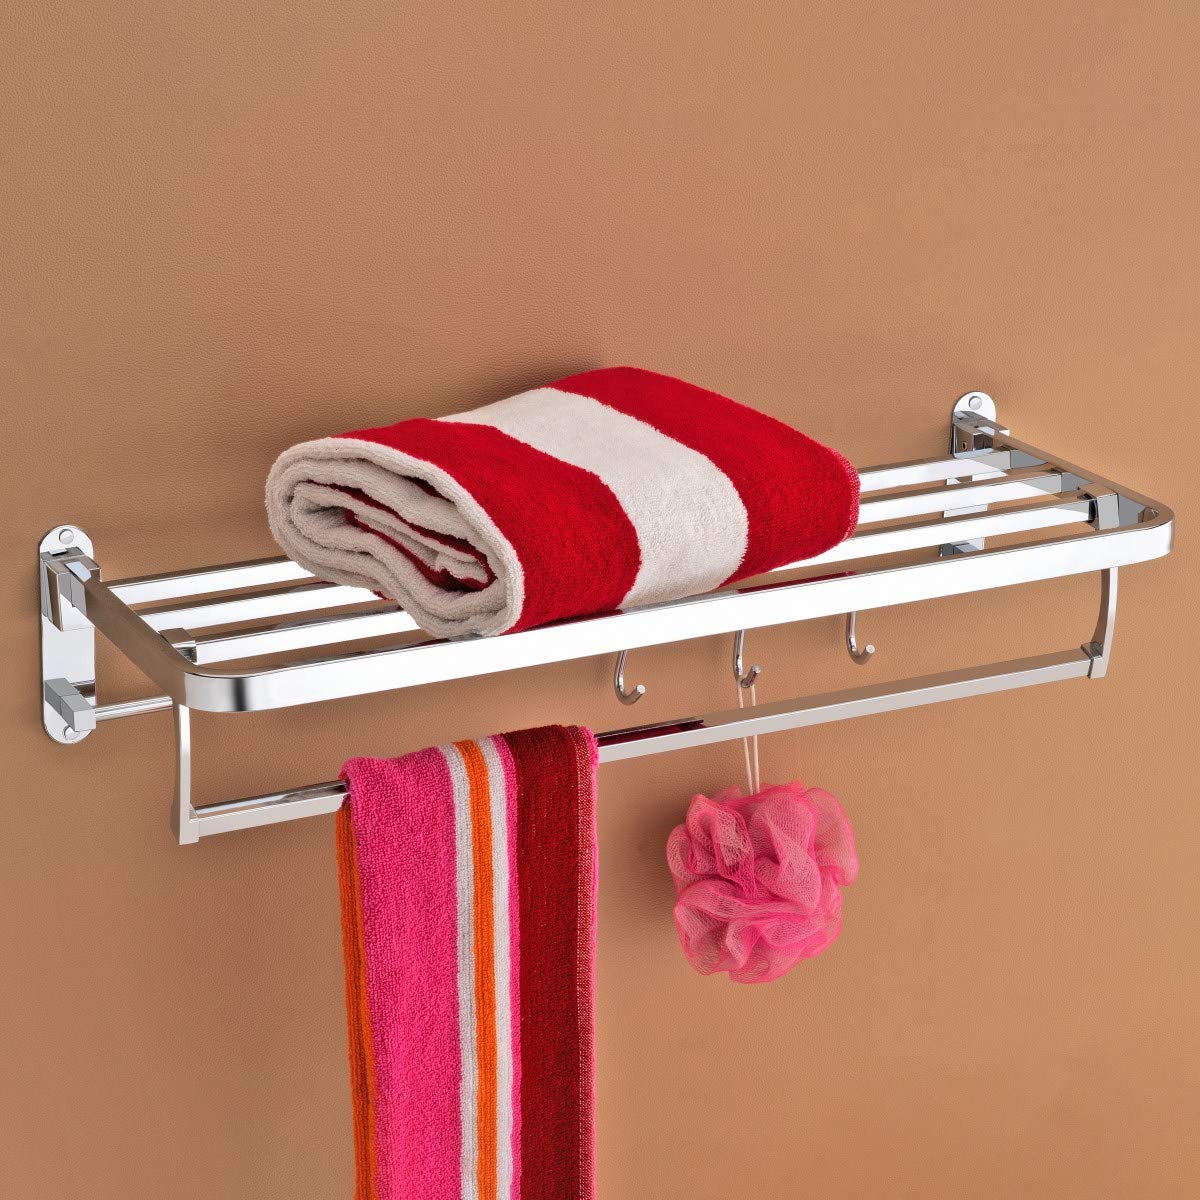 Plantex Premium Stainless Steel Folding Towel Rack/Towel Stand/Hanger for Bathroom/Bathroom Accessories (24 Inch-Chrome)